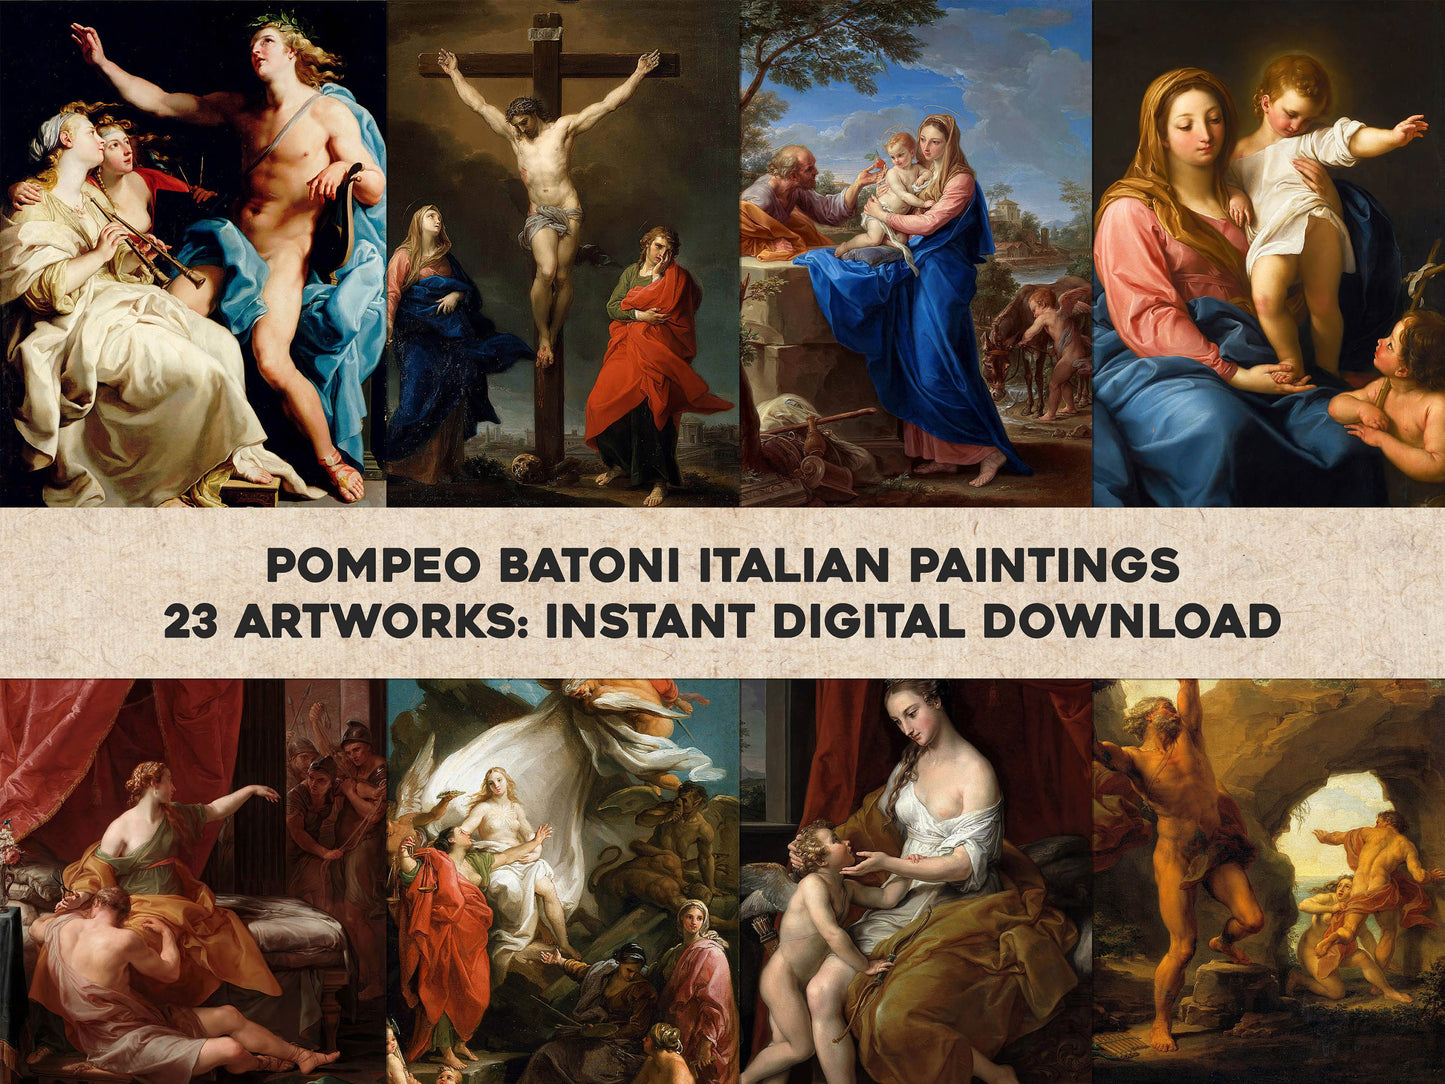 Pompeo Batoni Baroque Paintings [23 Images]